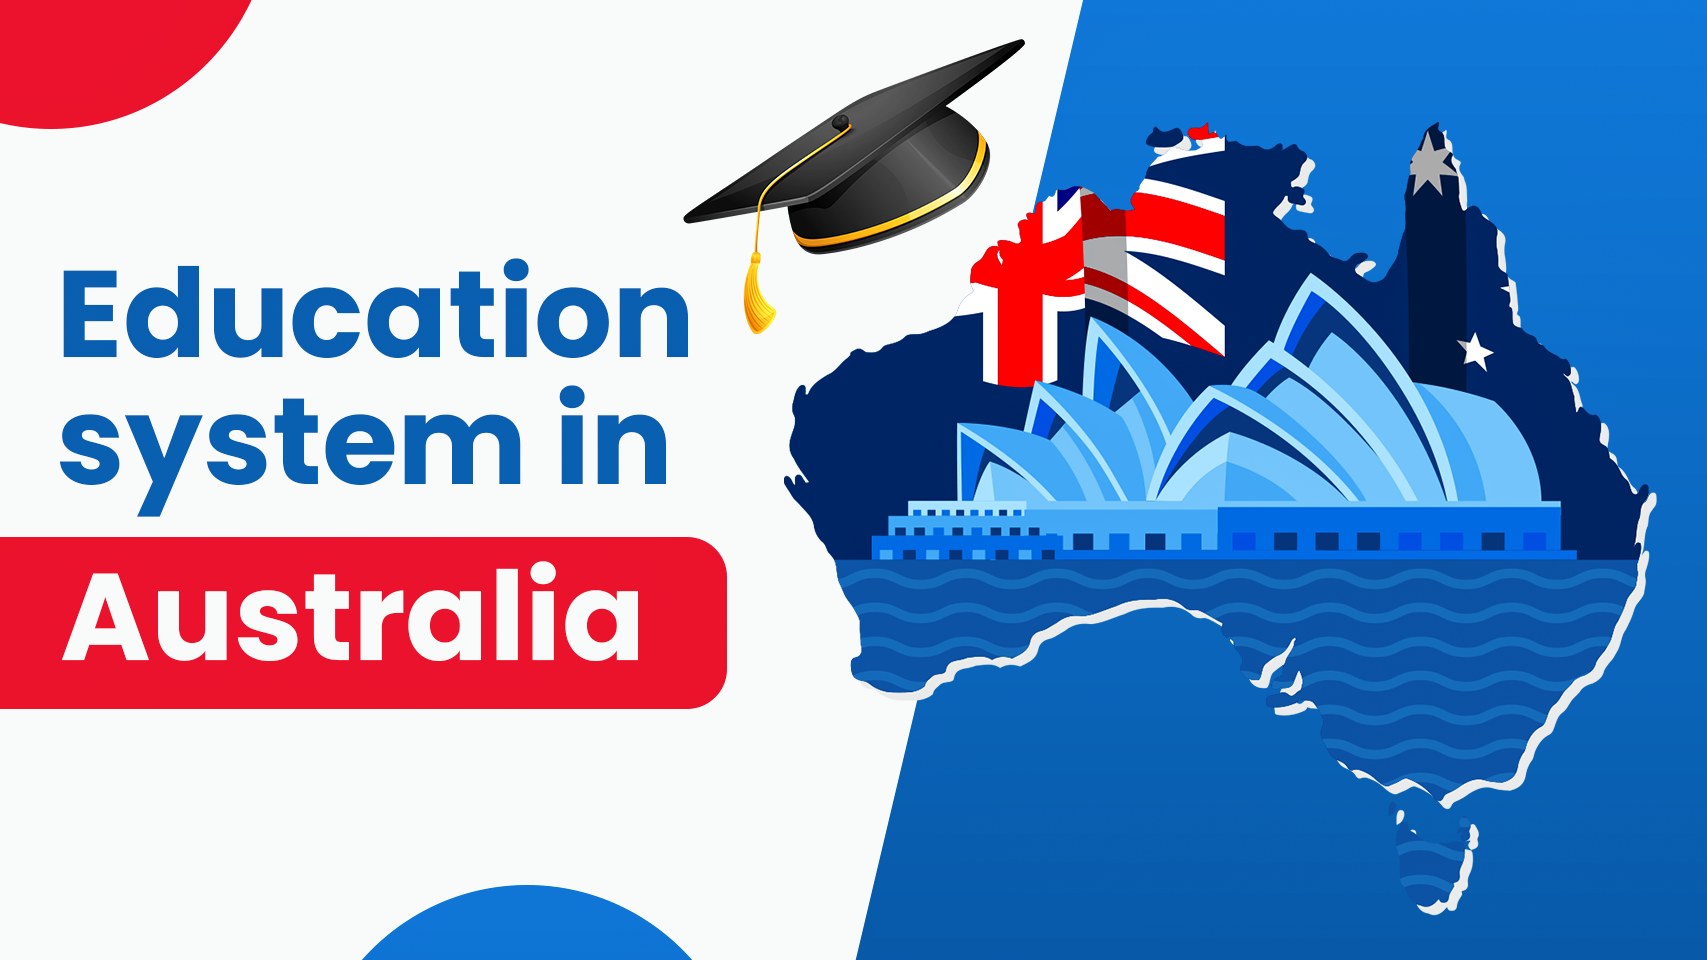 Education system in Australia